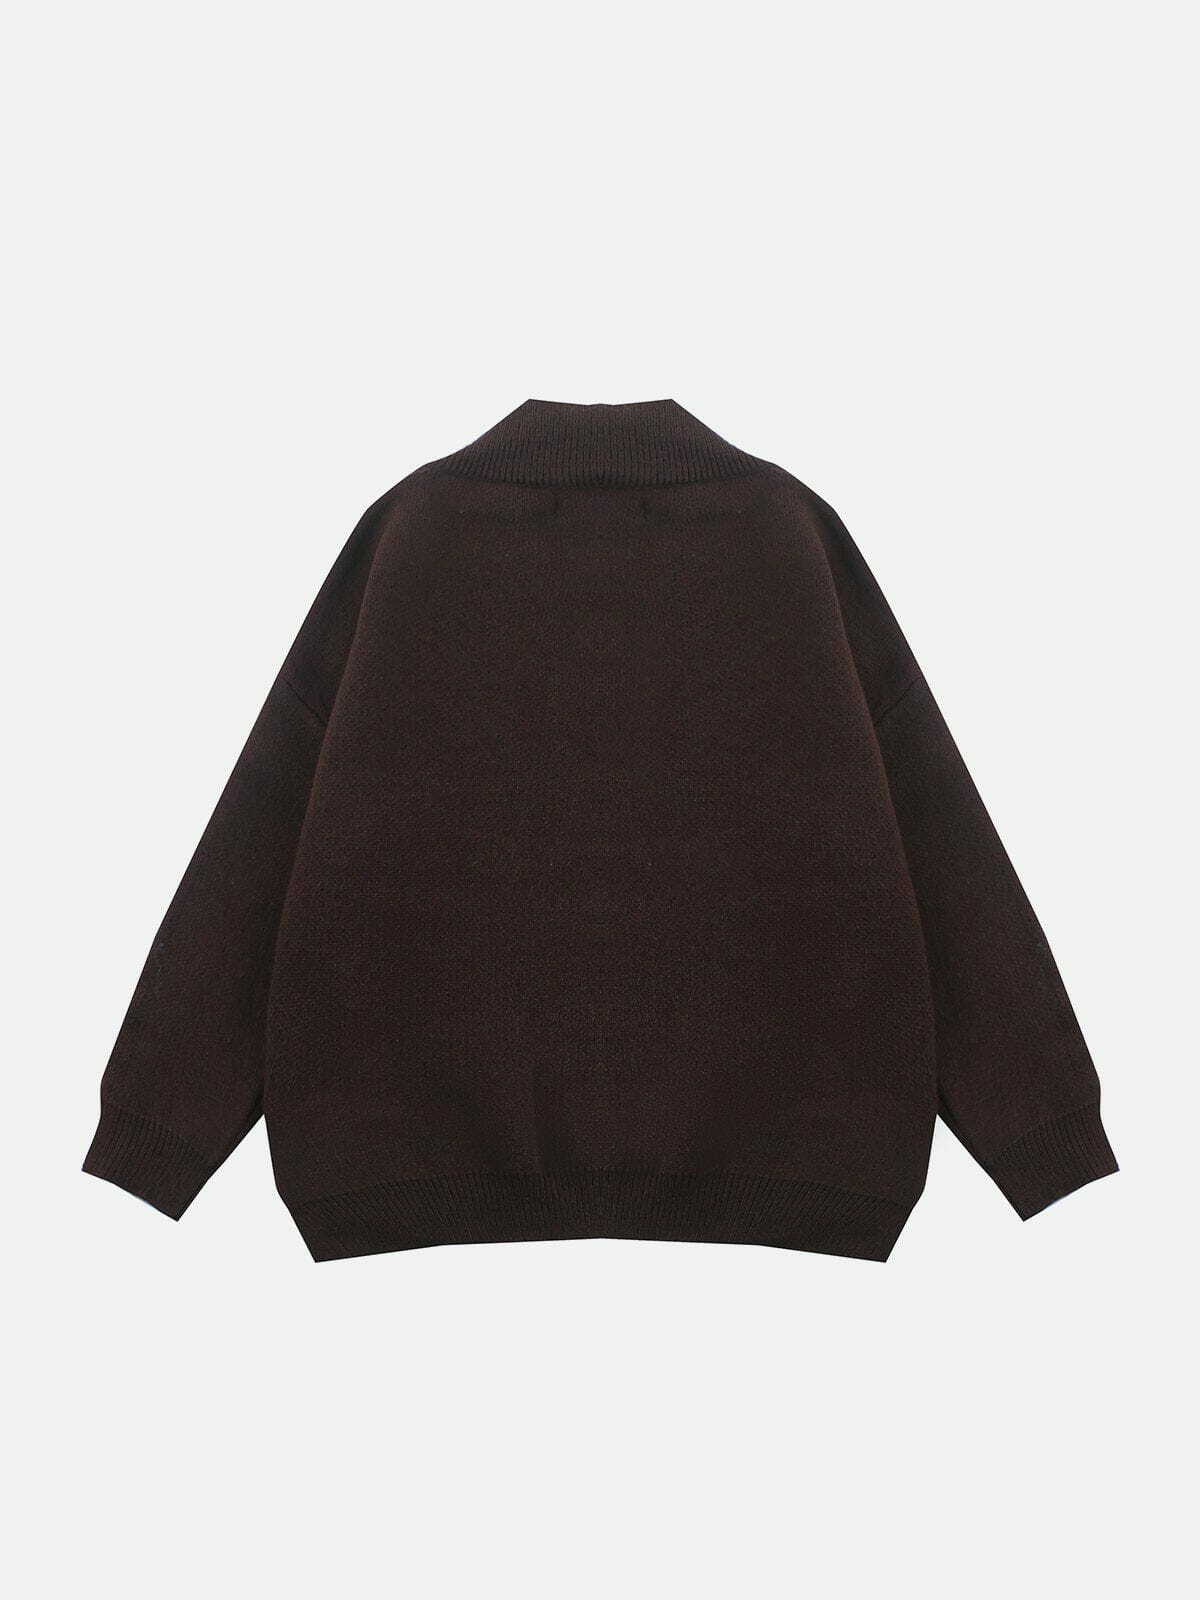 vibrant vneck sweater chic & cozy streetwear 8054